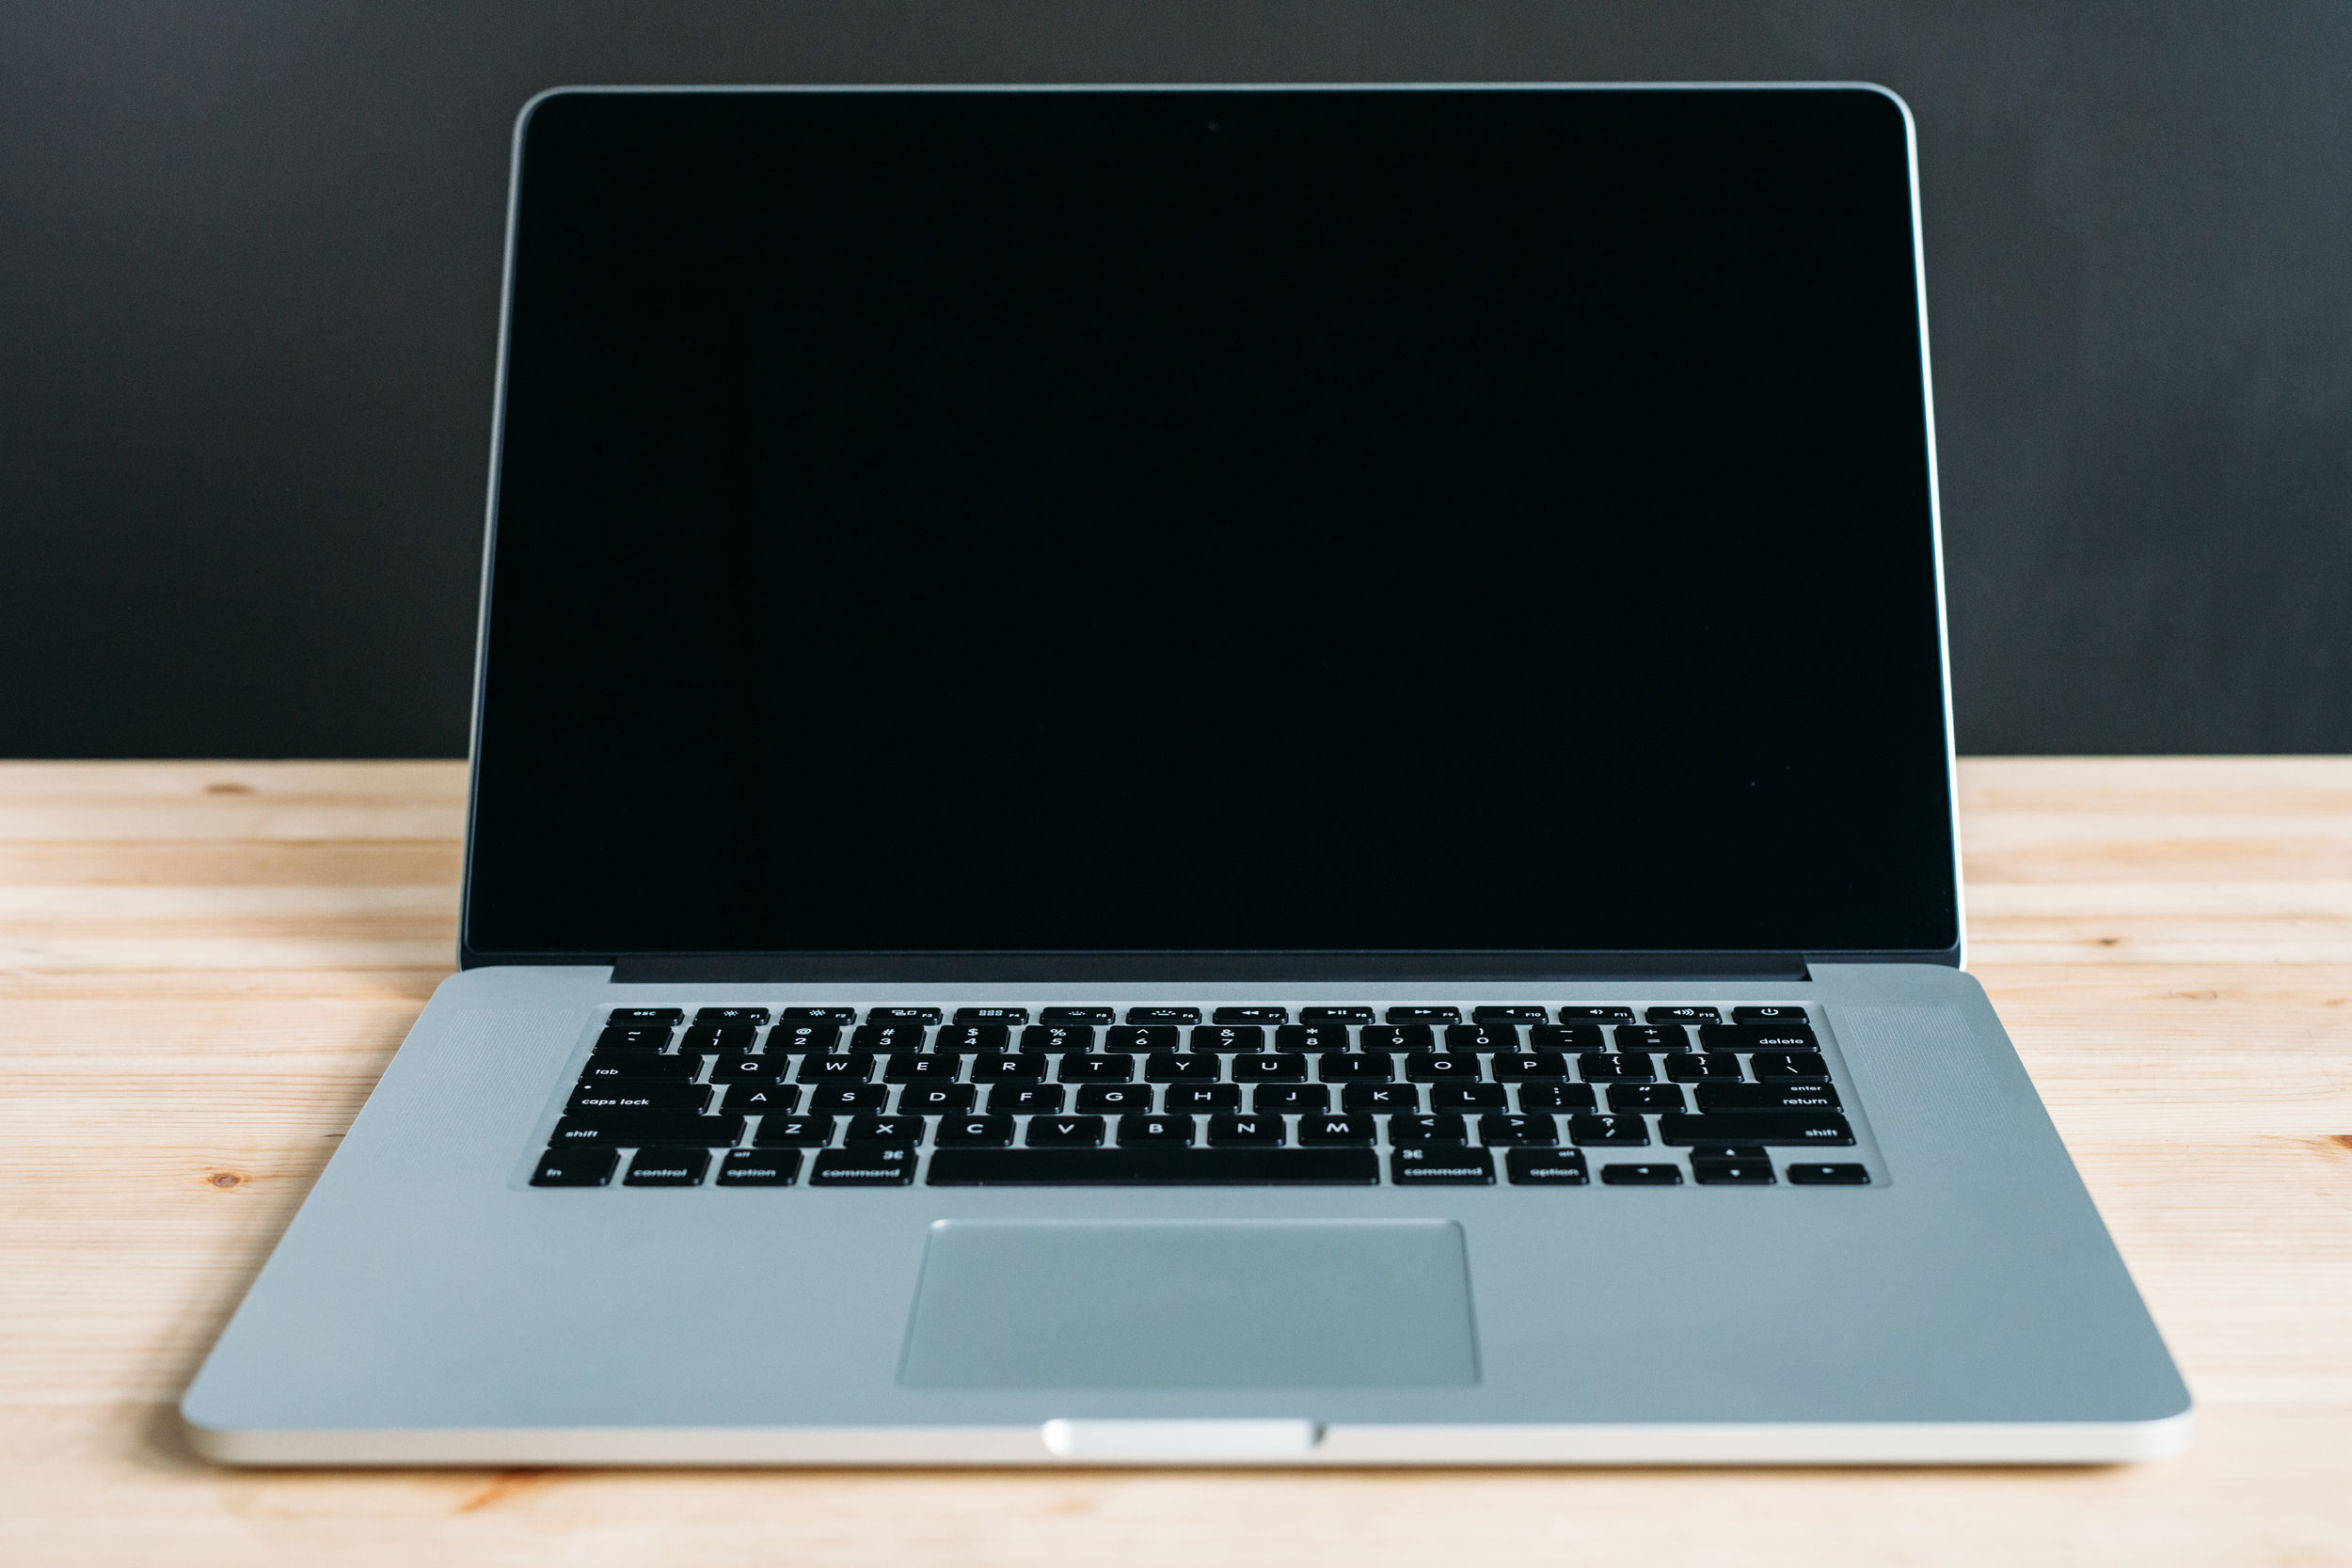 MacBook Pro (Retina, 15-inch, Early 2013) — One:One